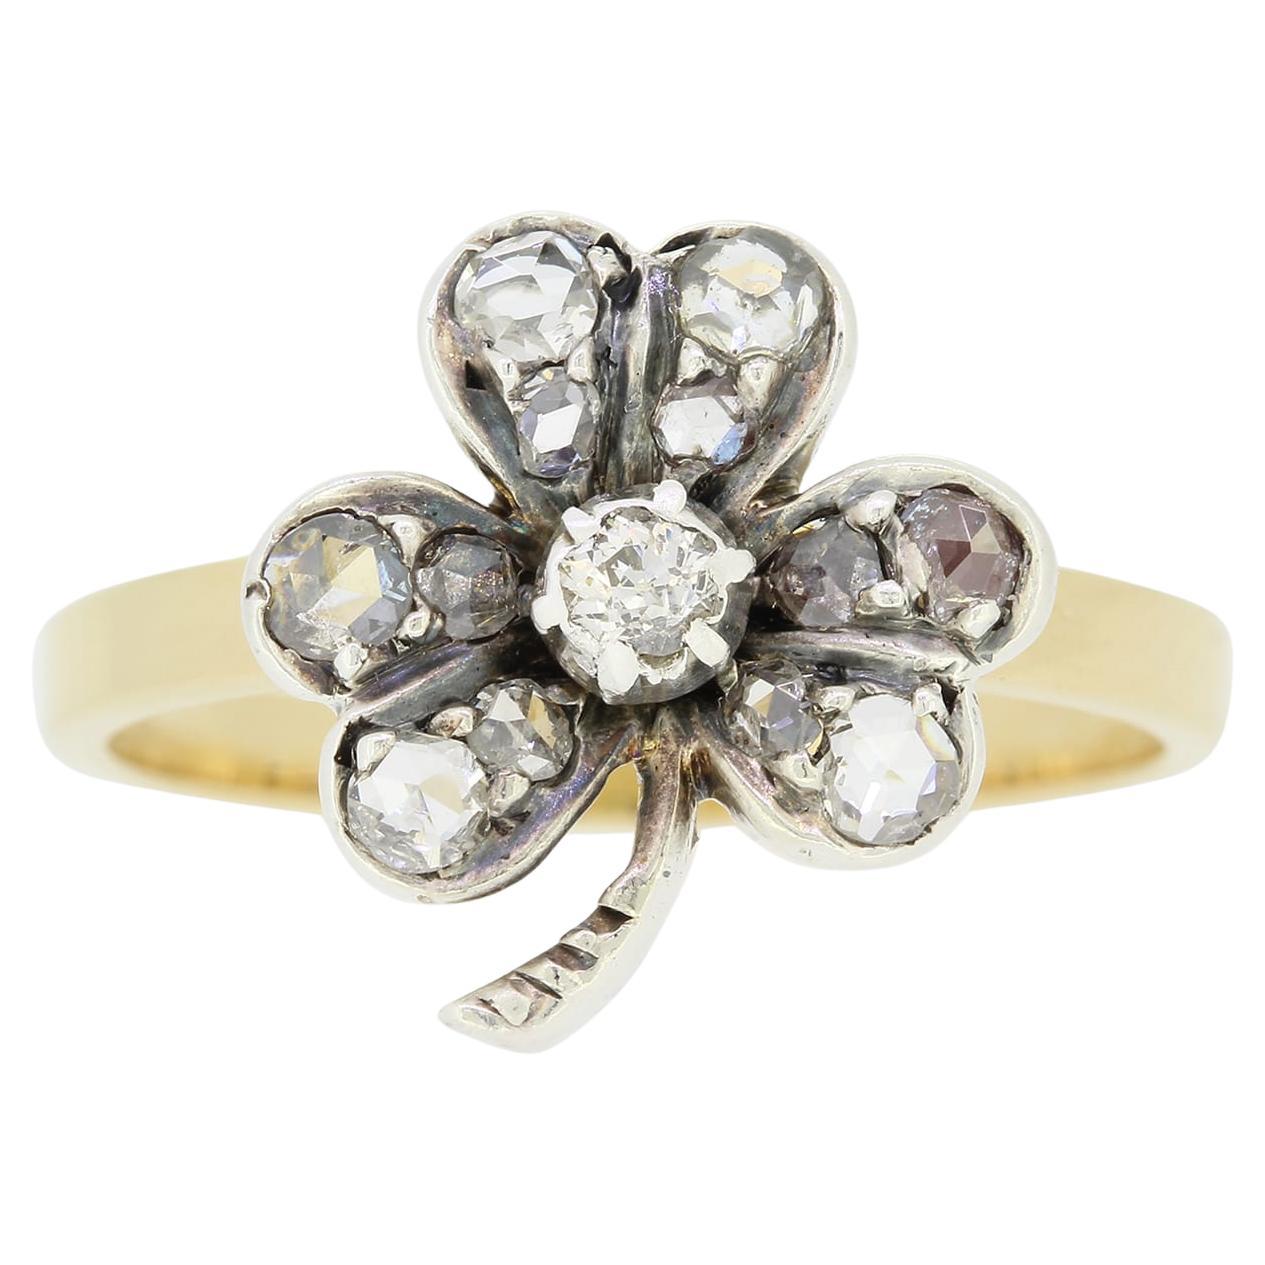 Victorian Rose Cut Diamond Clover Ring